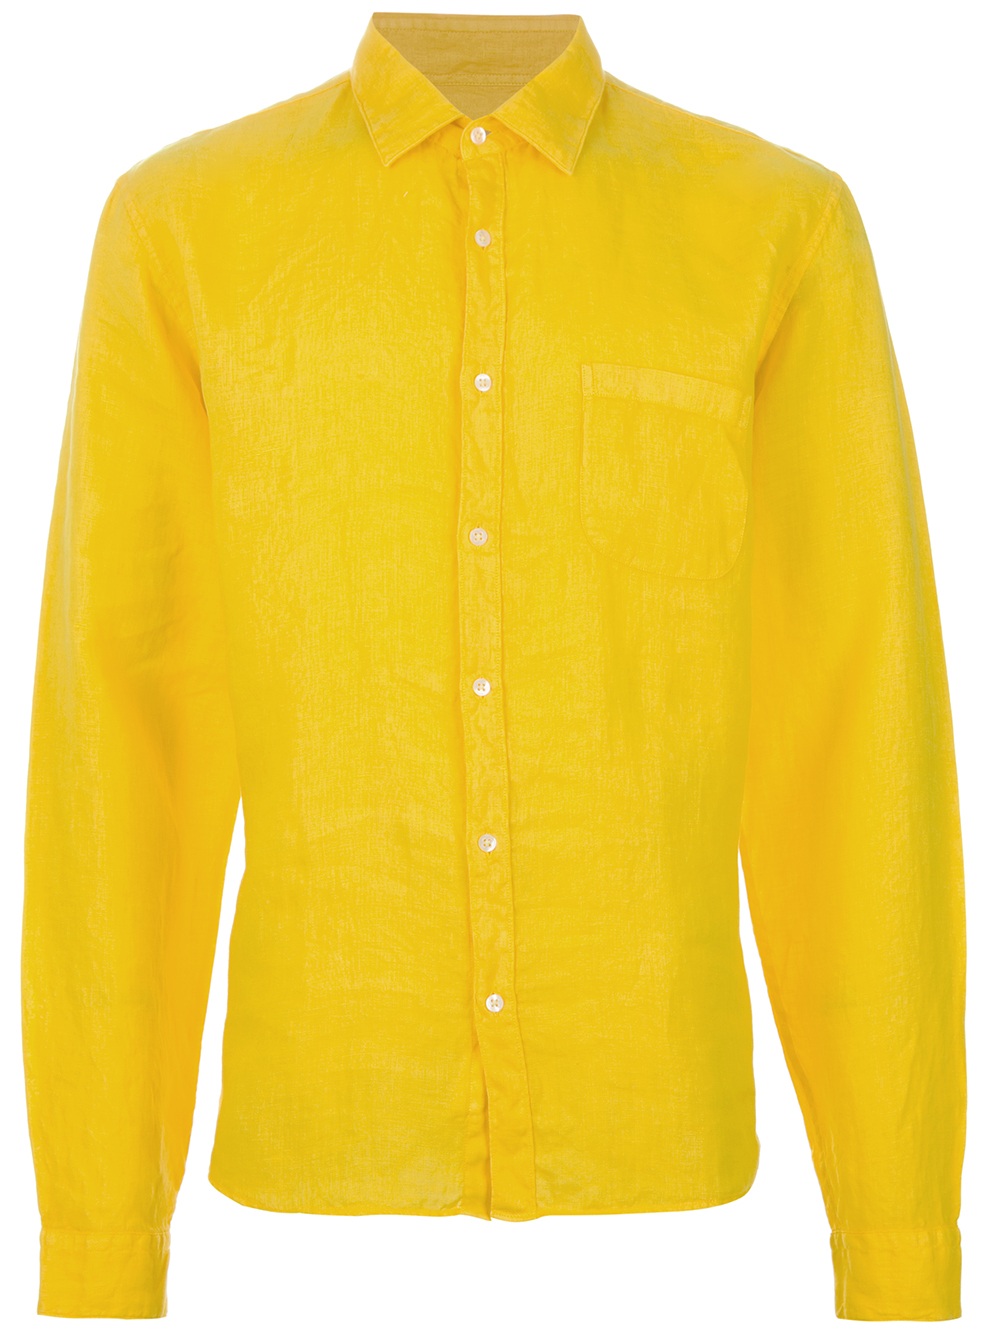 Lyst - Robert Friedman Bobby Slim Fit Shirt in Yellow for Men